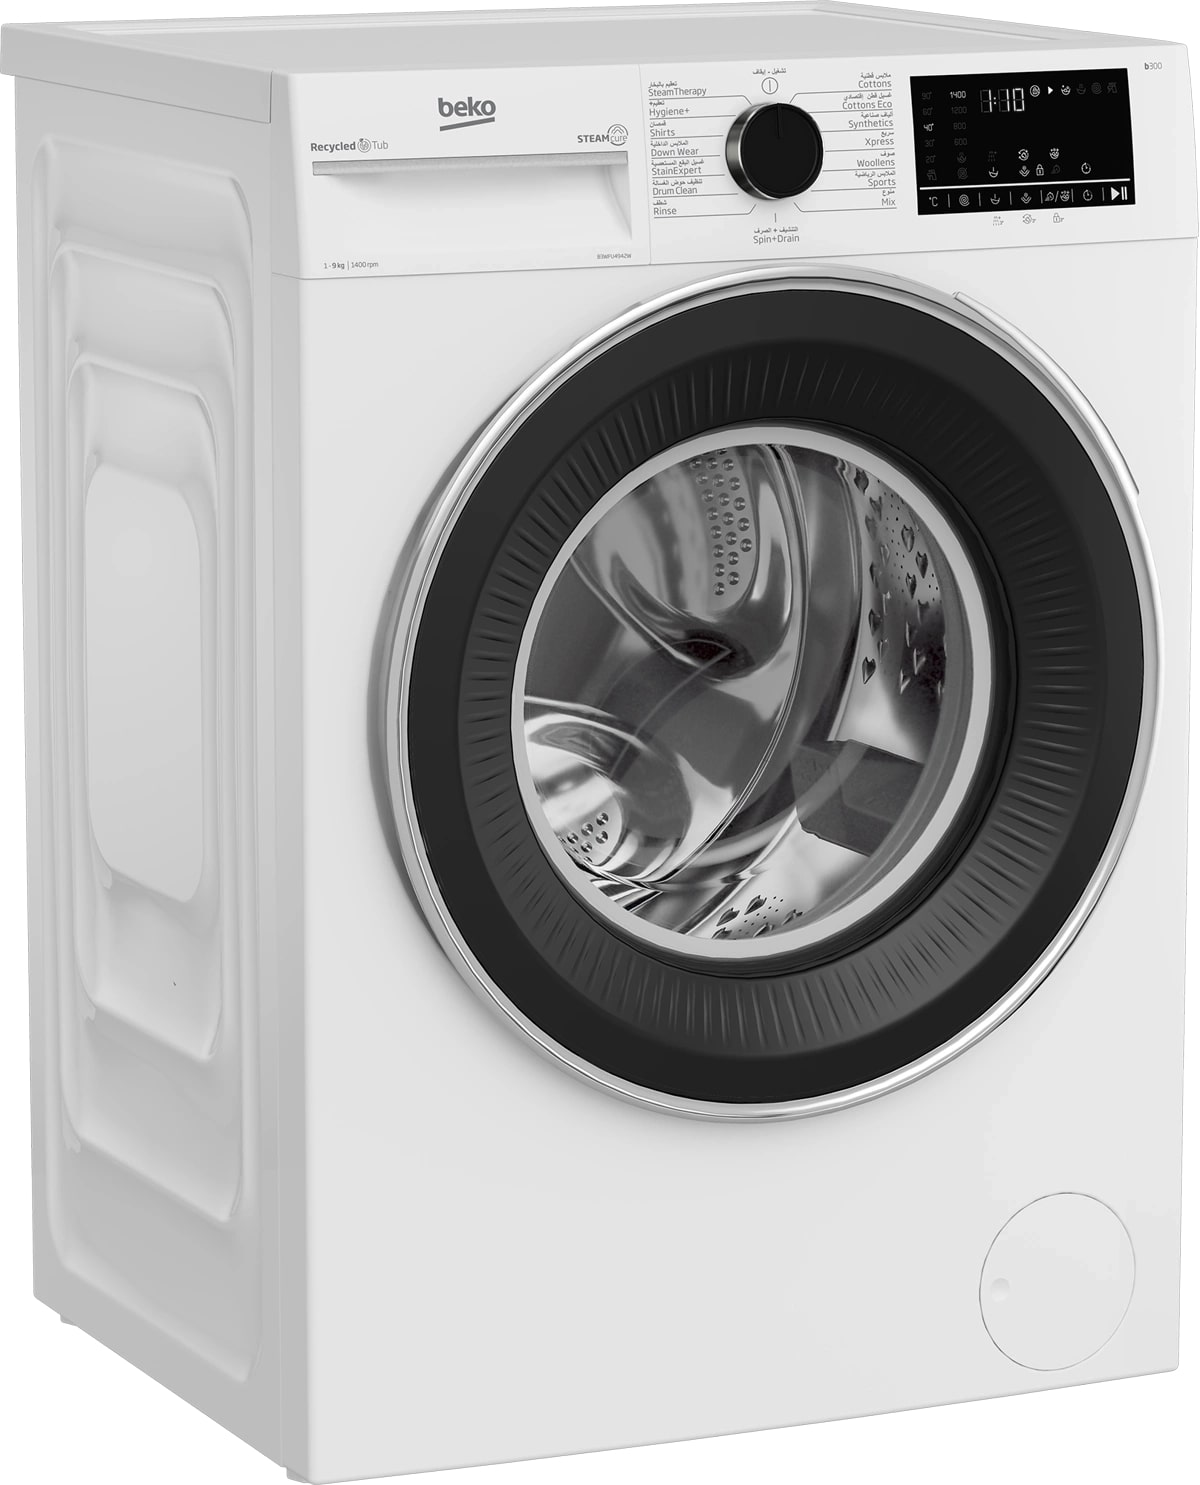 Beko Washing Machine, 9 kg, White Color, 1400 Cycles, 15 Programs, A+++